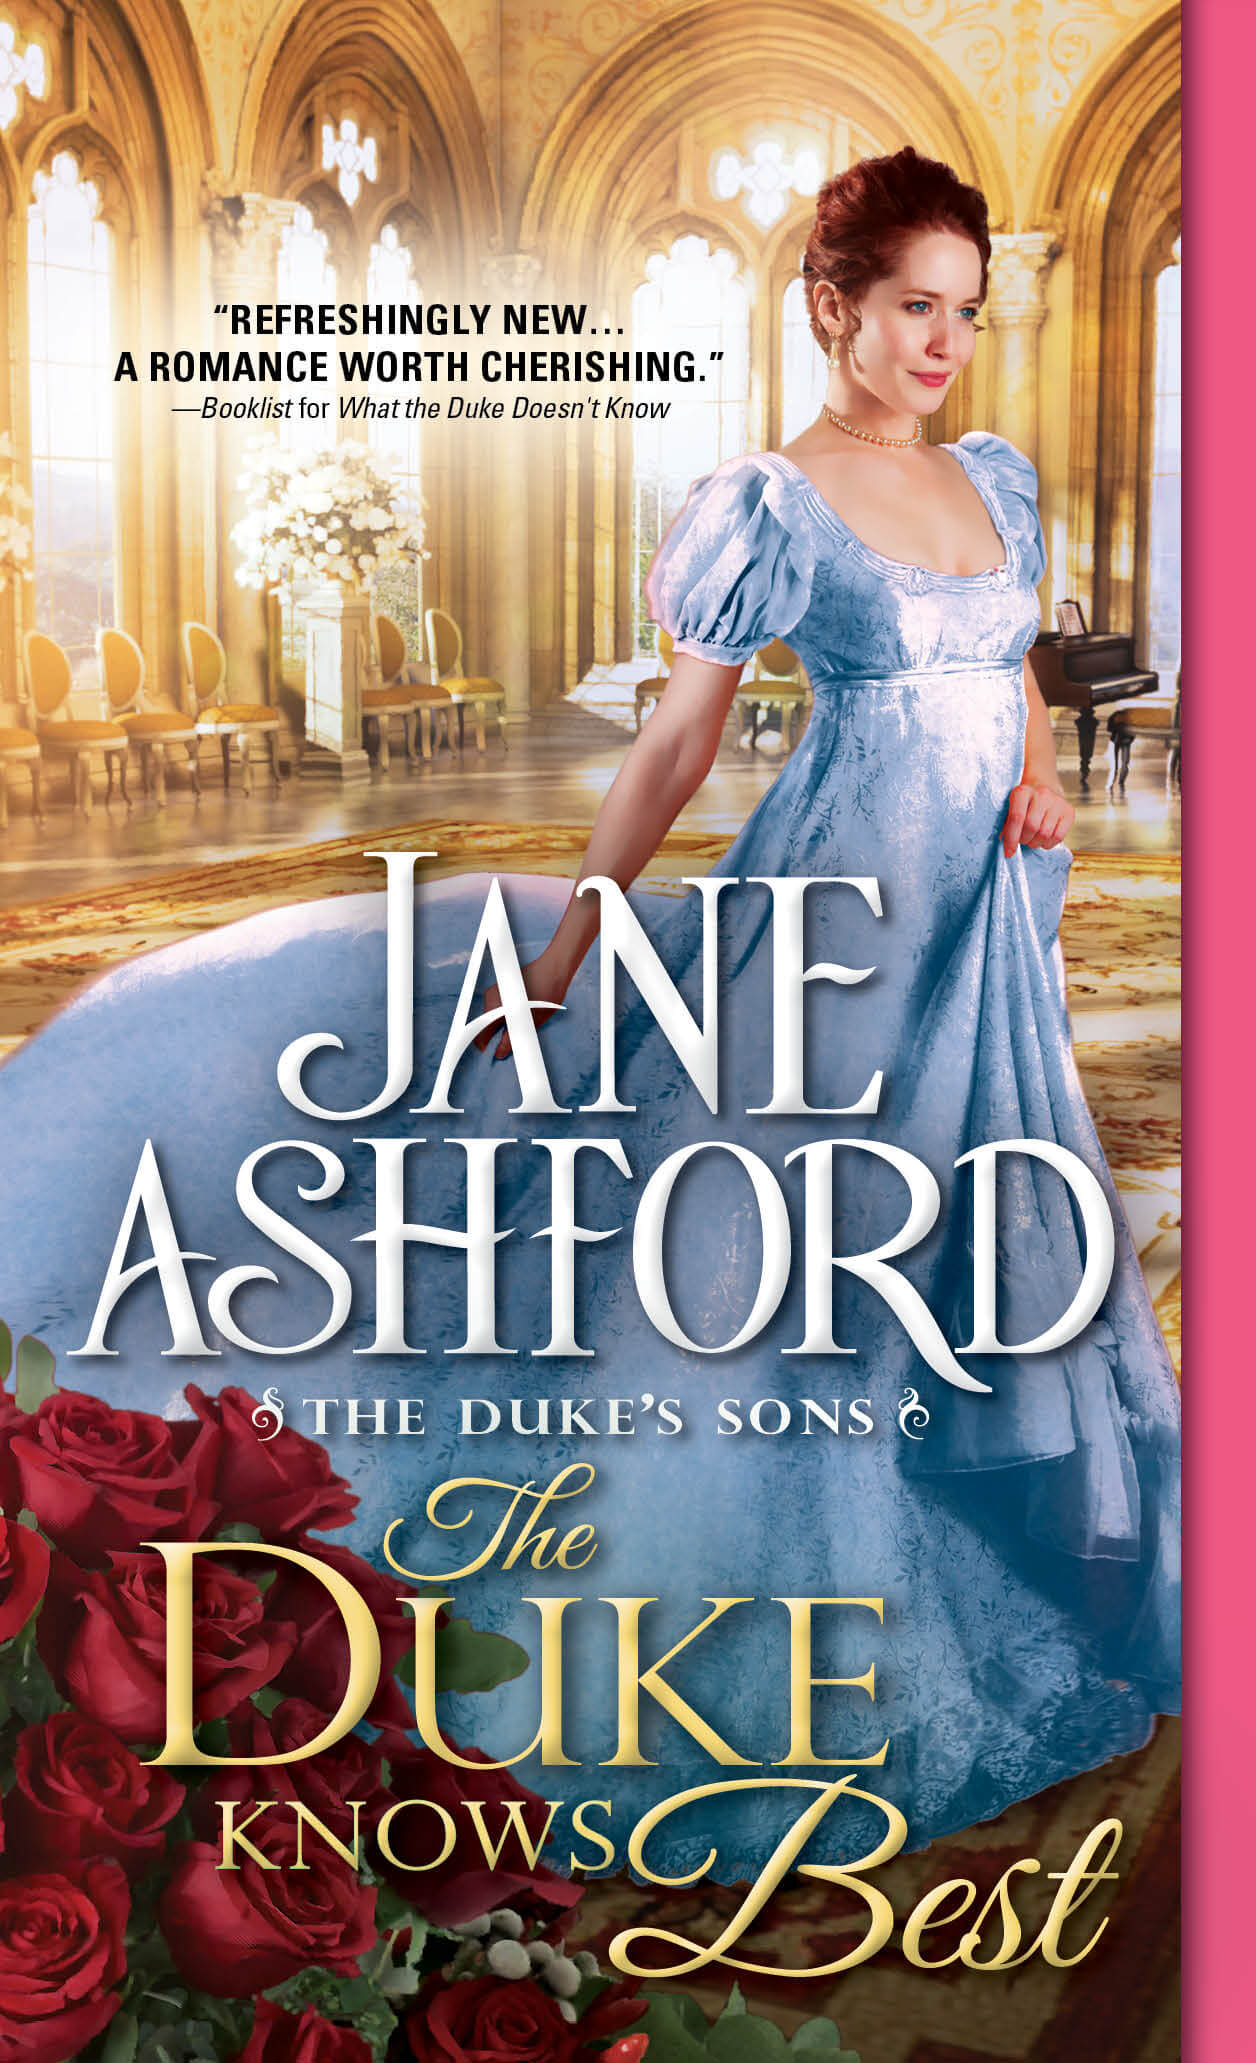 The Duke Knows Best by Jane Ashford